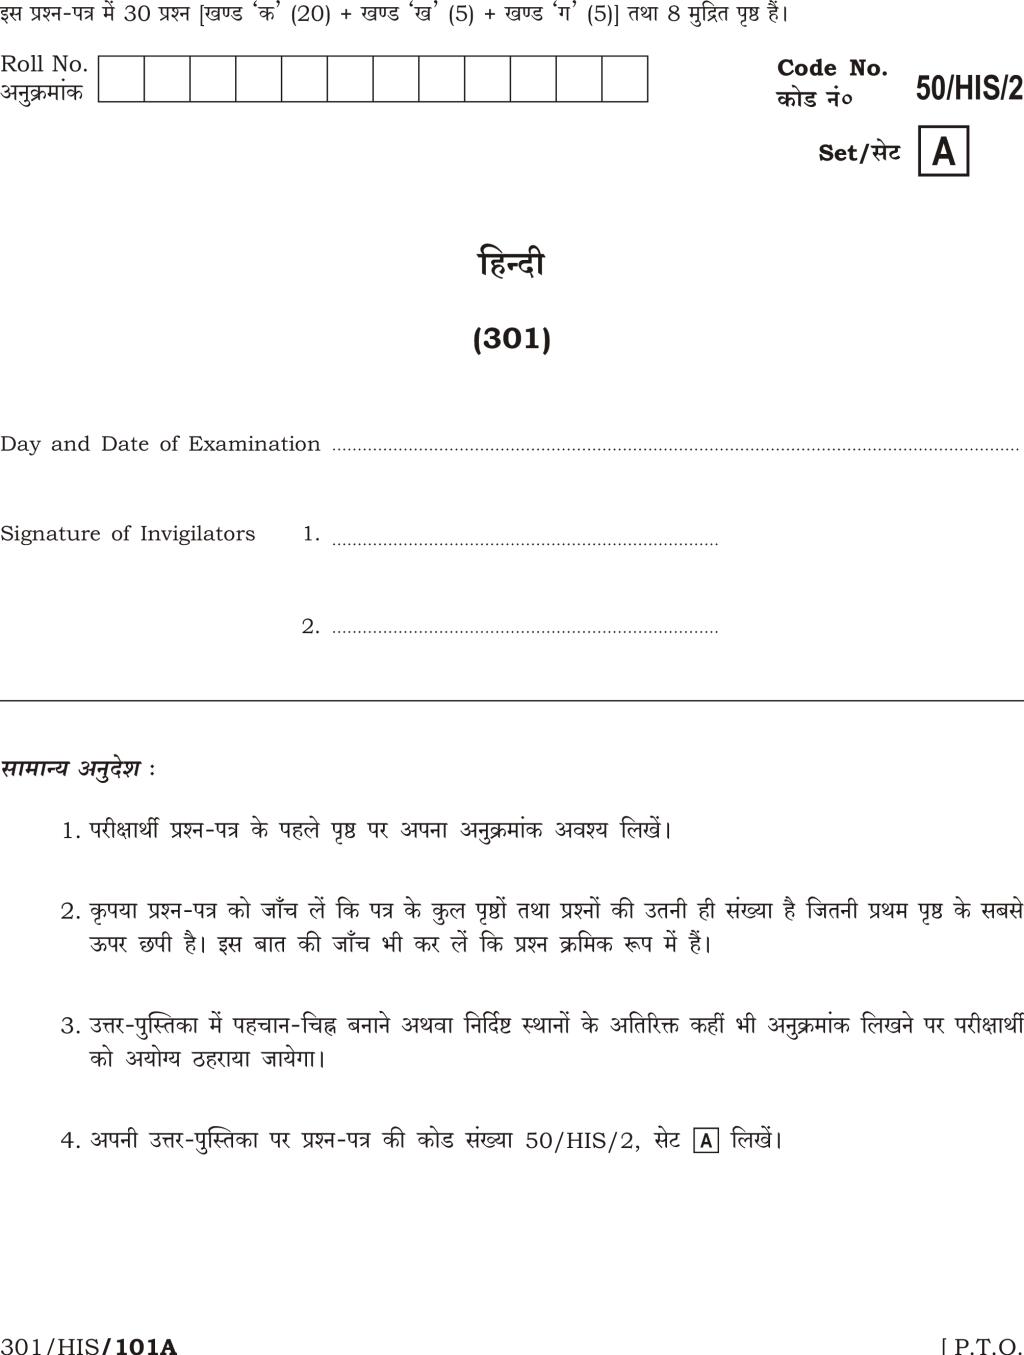 NIOS Class 12 Question Paper Apr 2015 - Hindi - Page 1